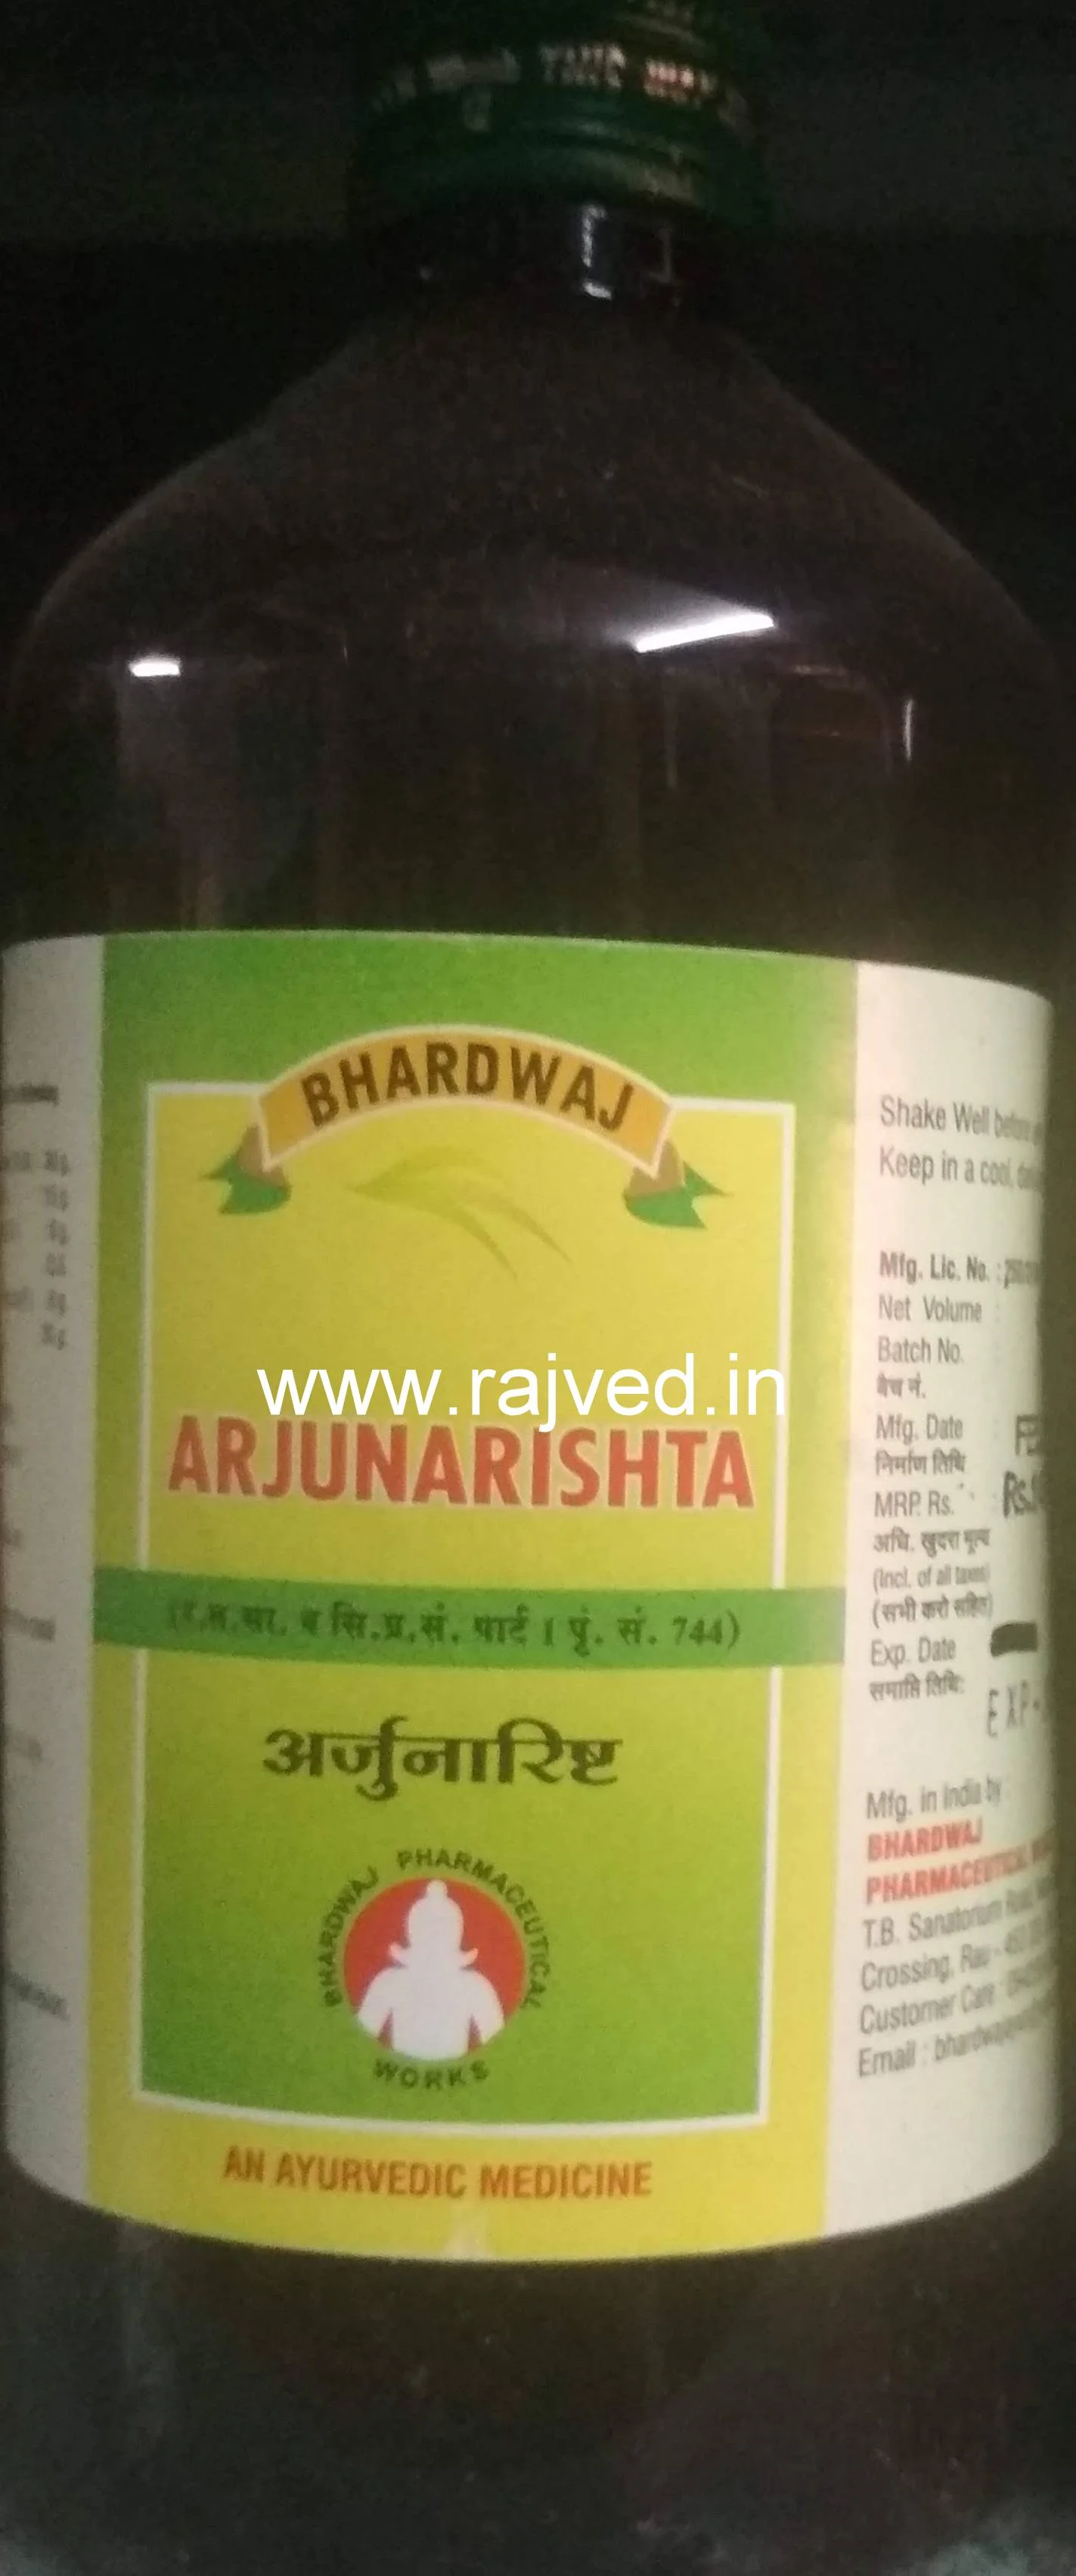 arjunarishta 5 lit bhardwaj pharmaceuticals indore